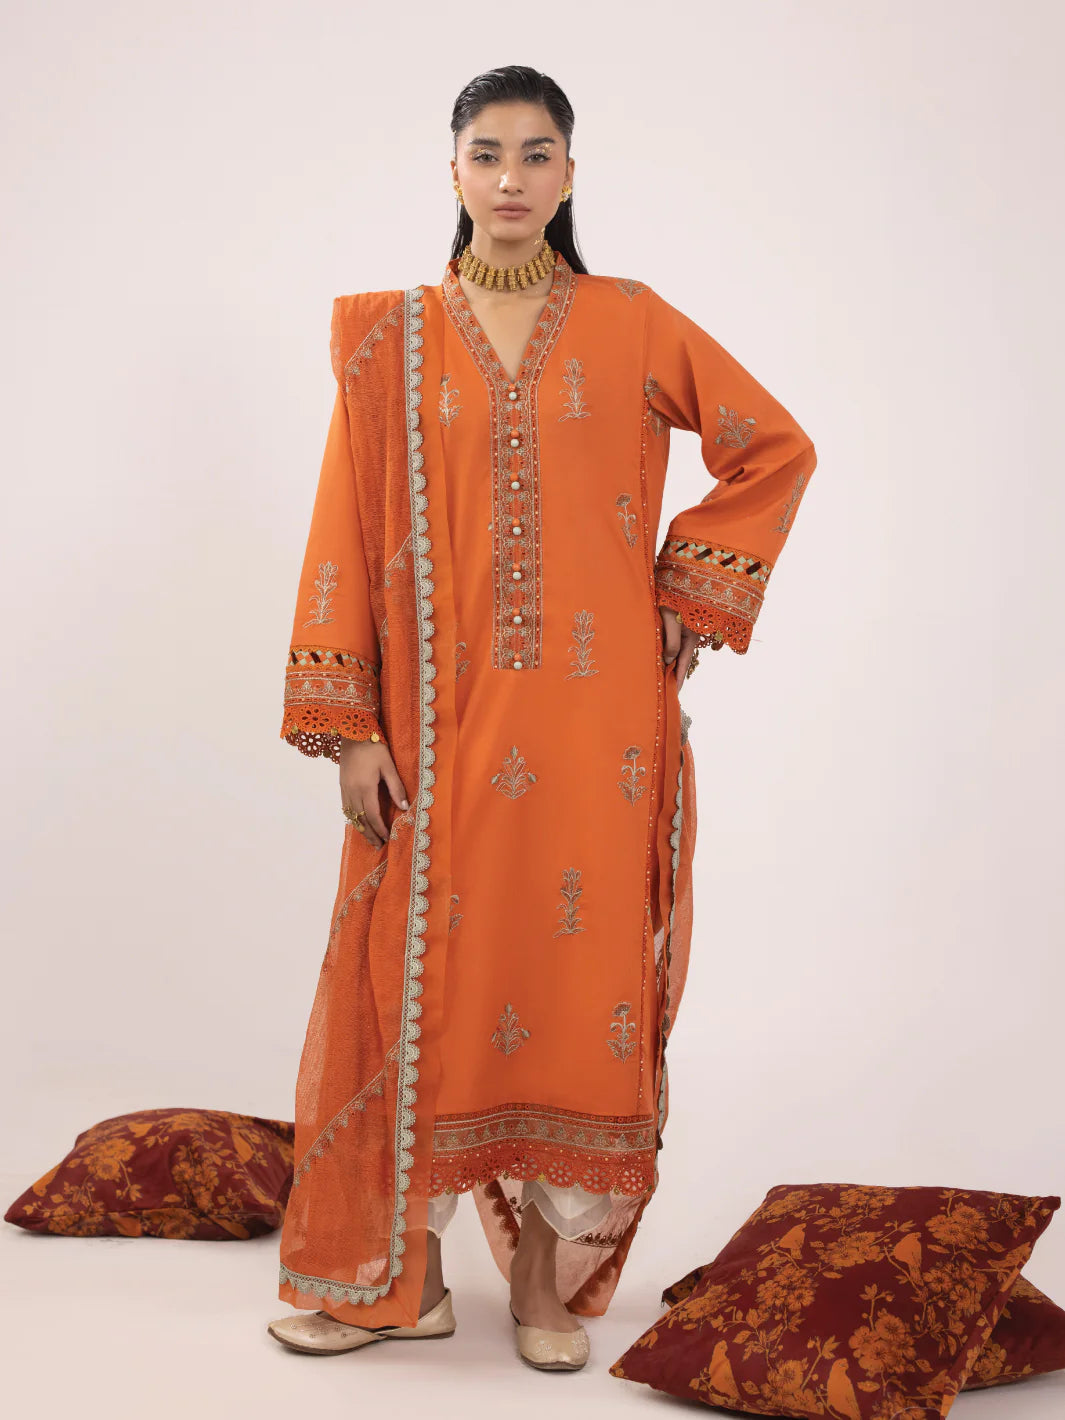 Ittehad | Faiza Faisal  Rangeeli Lawn 24 | Chammo - Khanumjan  Pakistani Clothes and Designer Dresses in UK, USA 